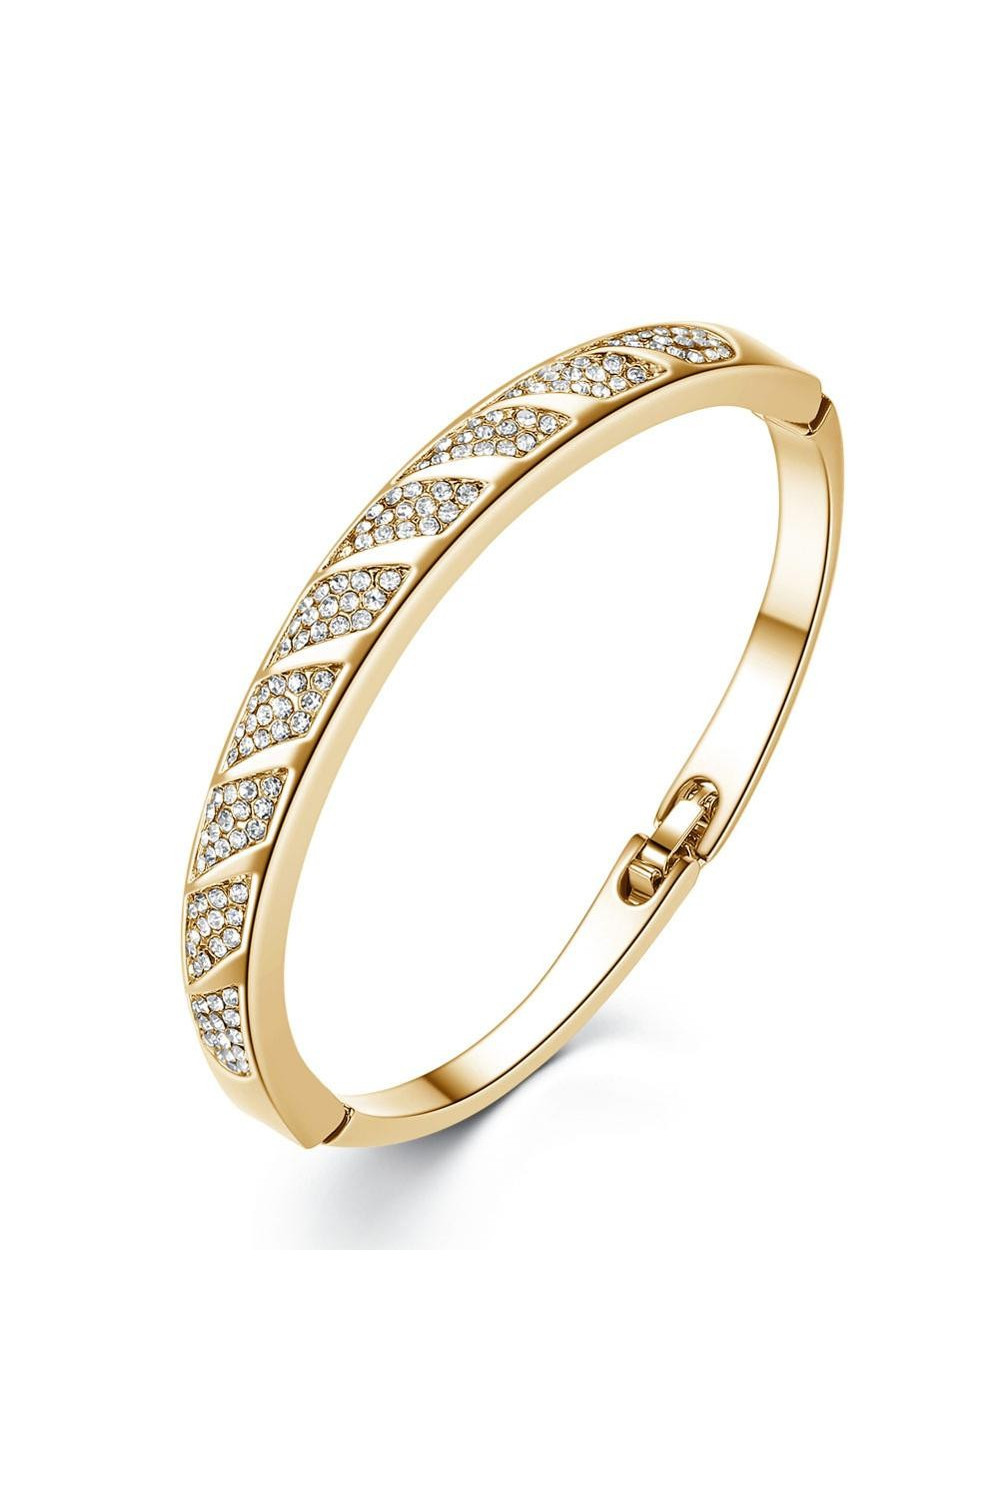 Gold Glam Bracelet